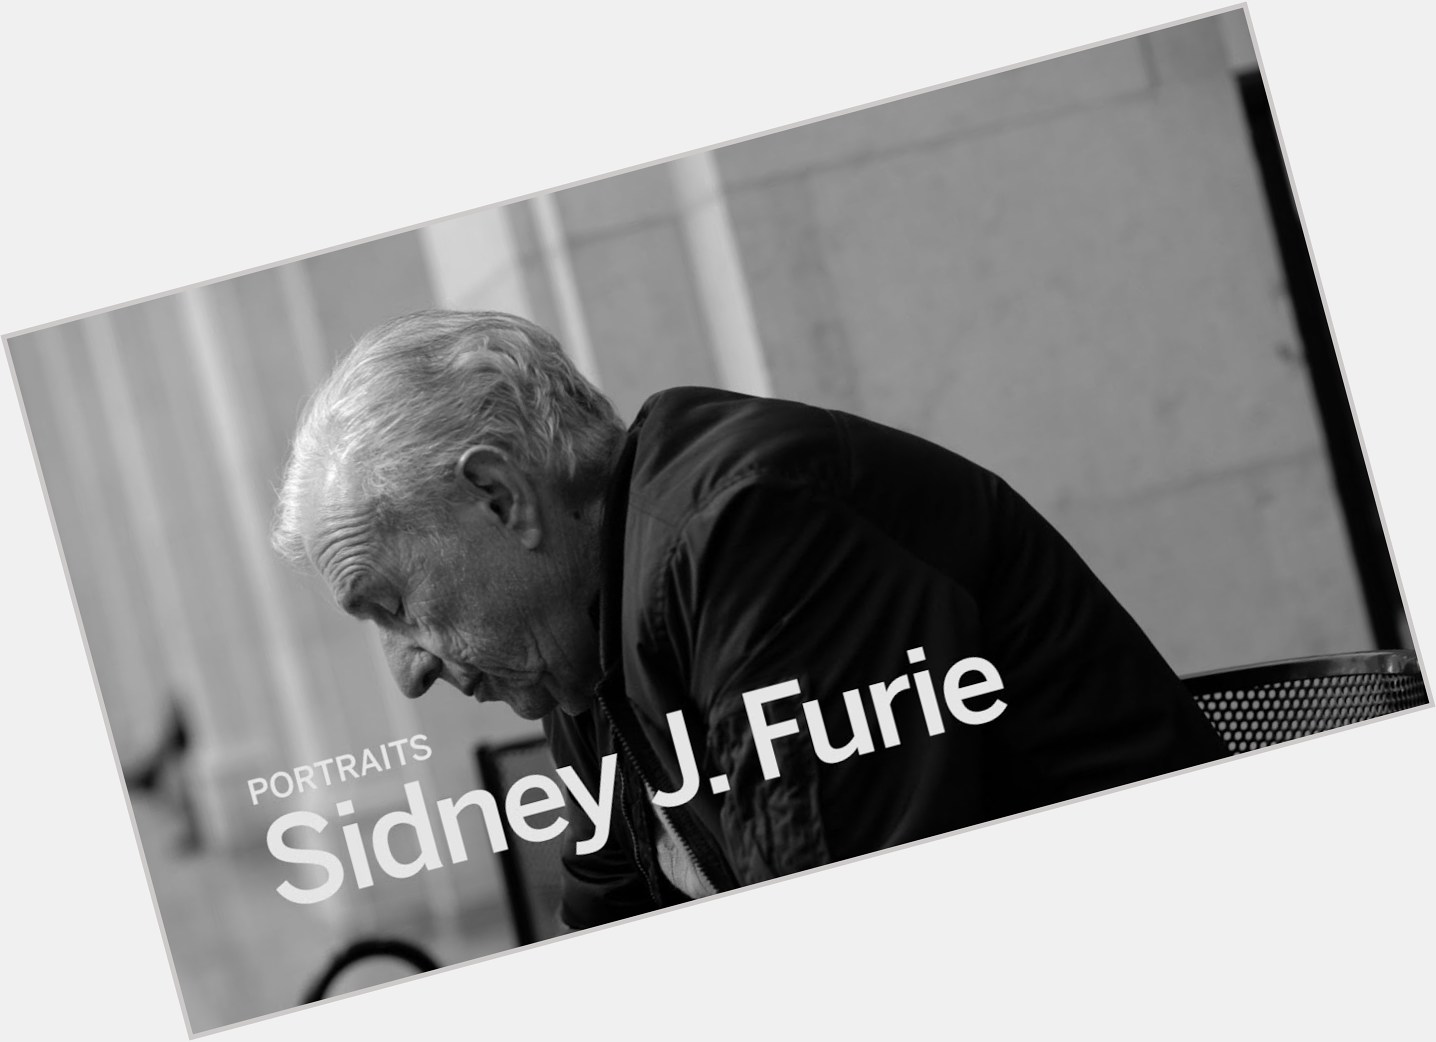 Sidney J Furie  